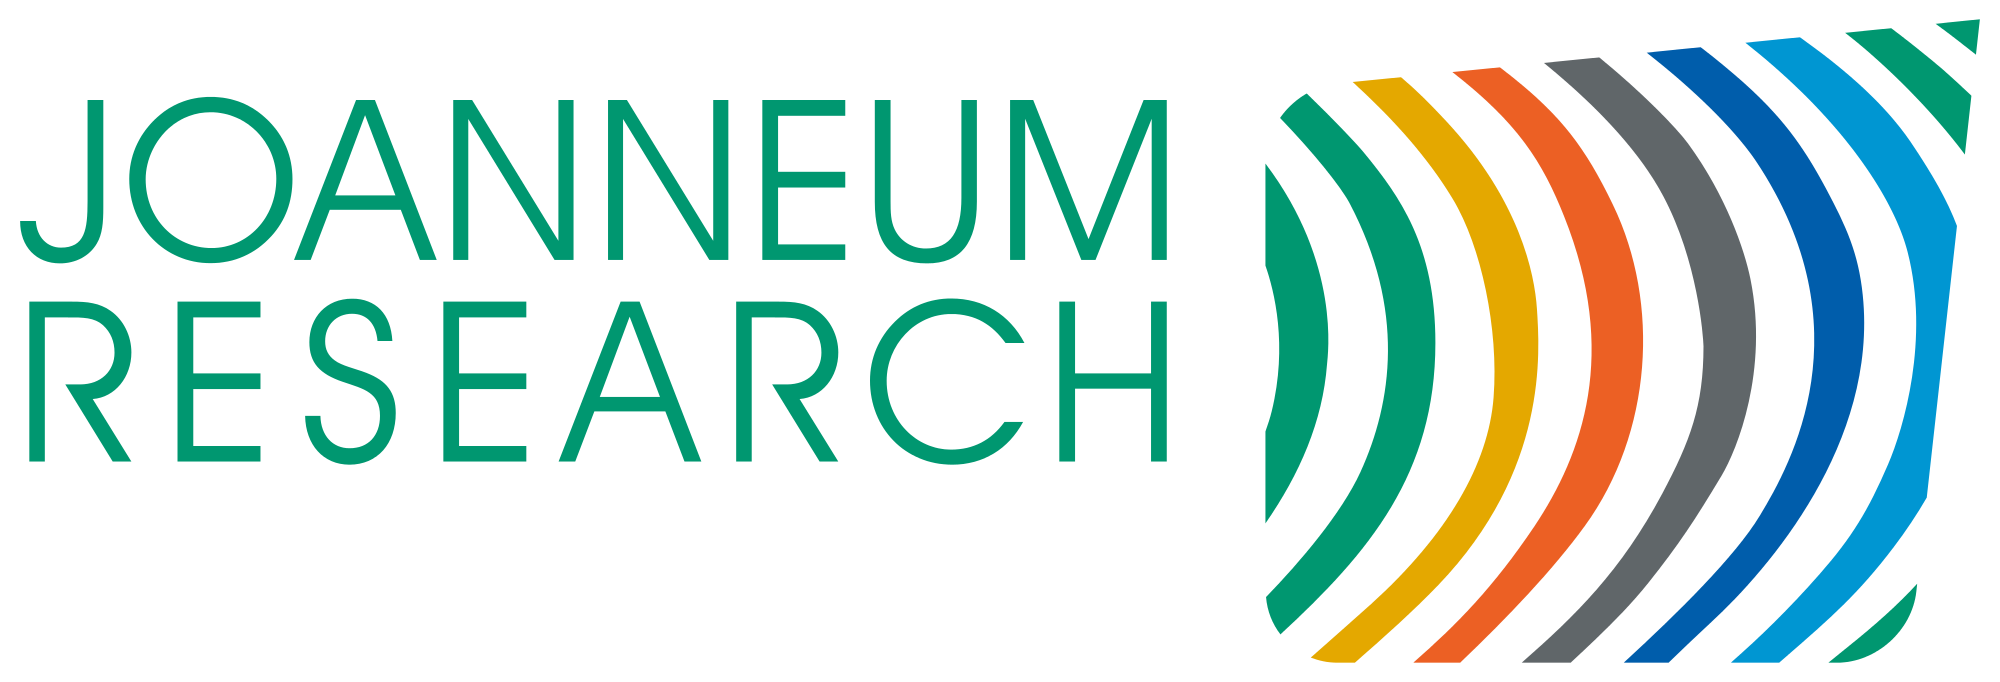 Joanneum_Research_201x_logo.svg